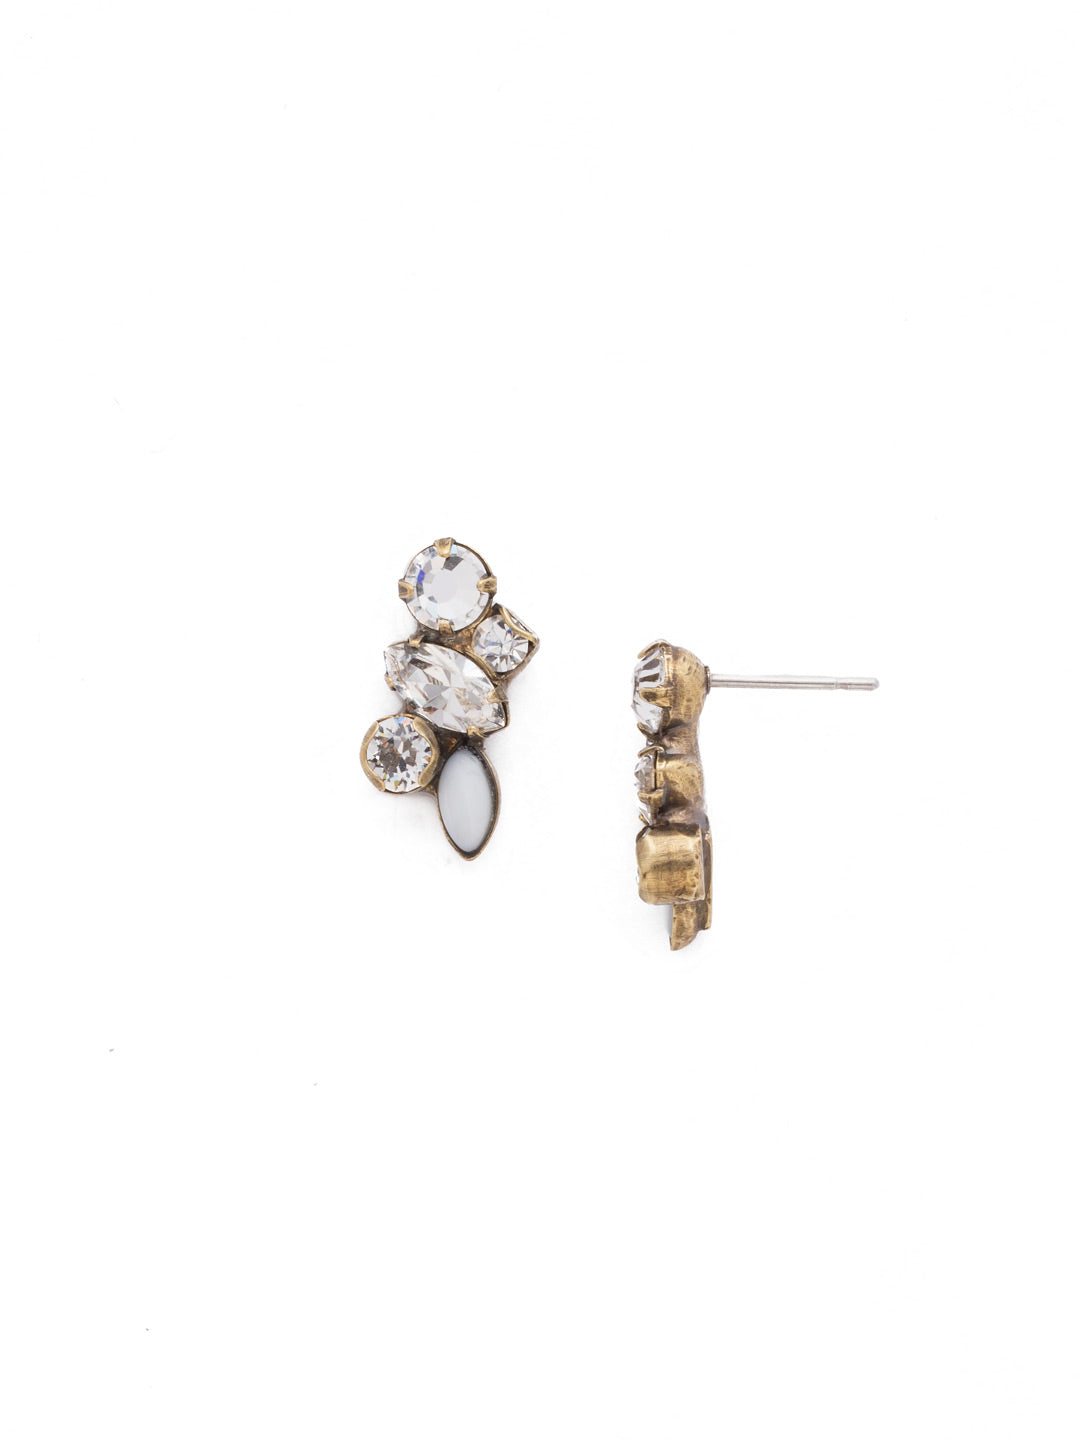 Petite Crystal Cluster Post Earrings - EDG5AGCRY